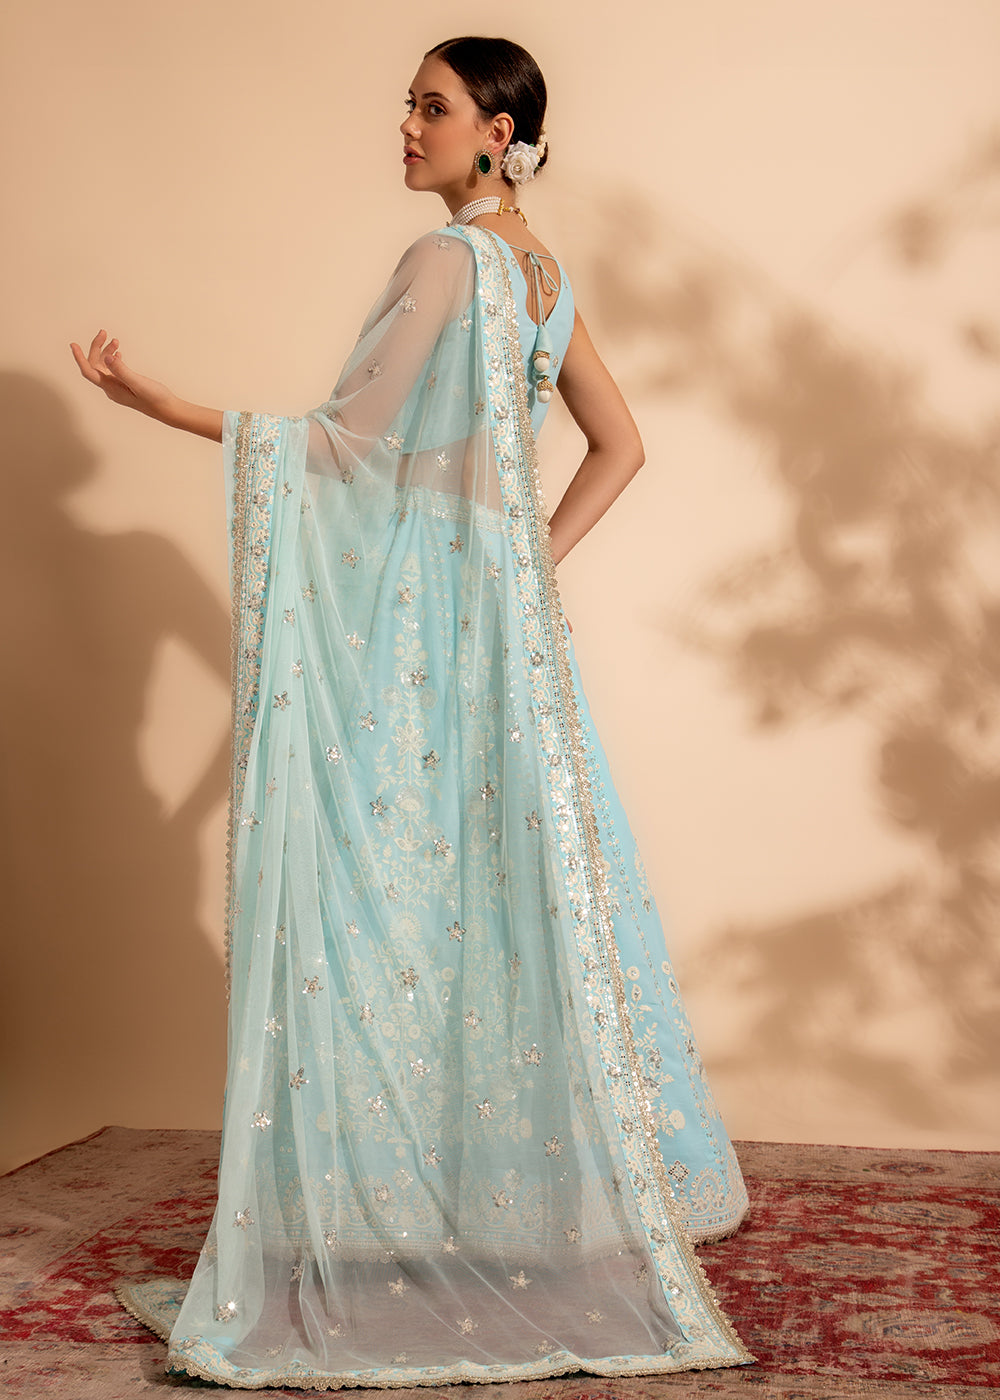 Buy Now Charming Sky Blue Bridesmaid Style Wedding Lehenga Choli Online in USA, UK, Canada & Worldwide at Empress Clothing.